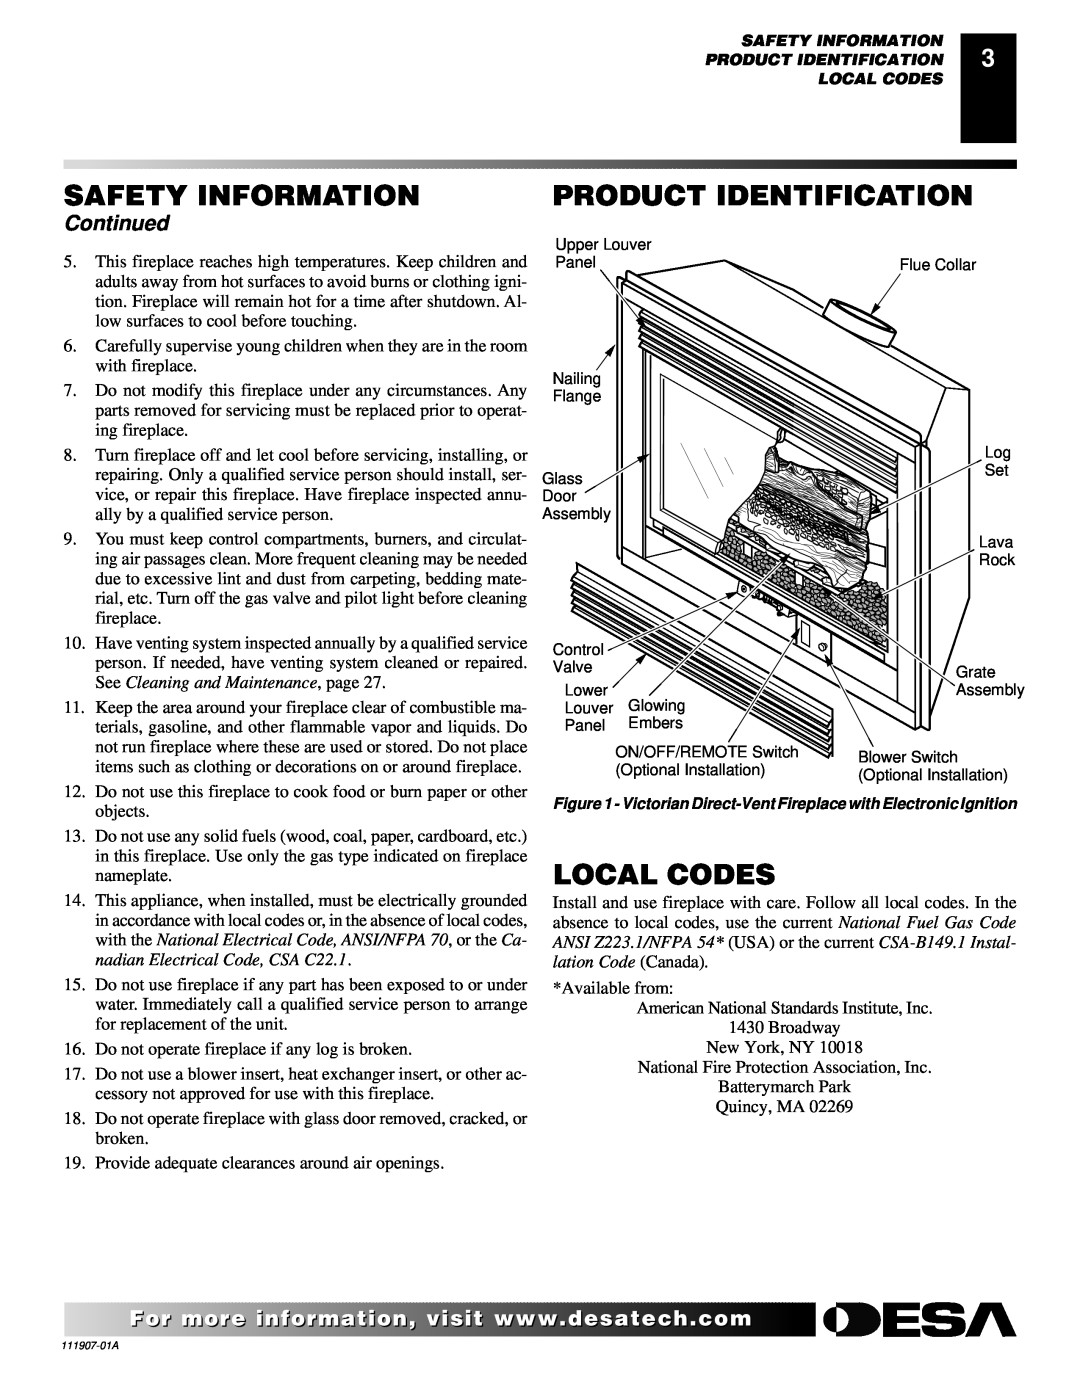 Desa (V)V42EPA(1), (V)V42ENA(1) installation manual Product Identification, Local Codes, Continued, Safety Information 